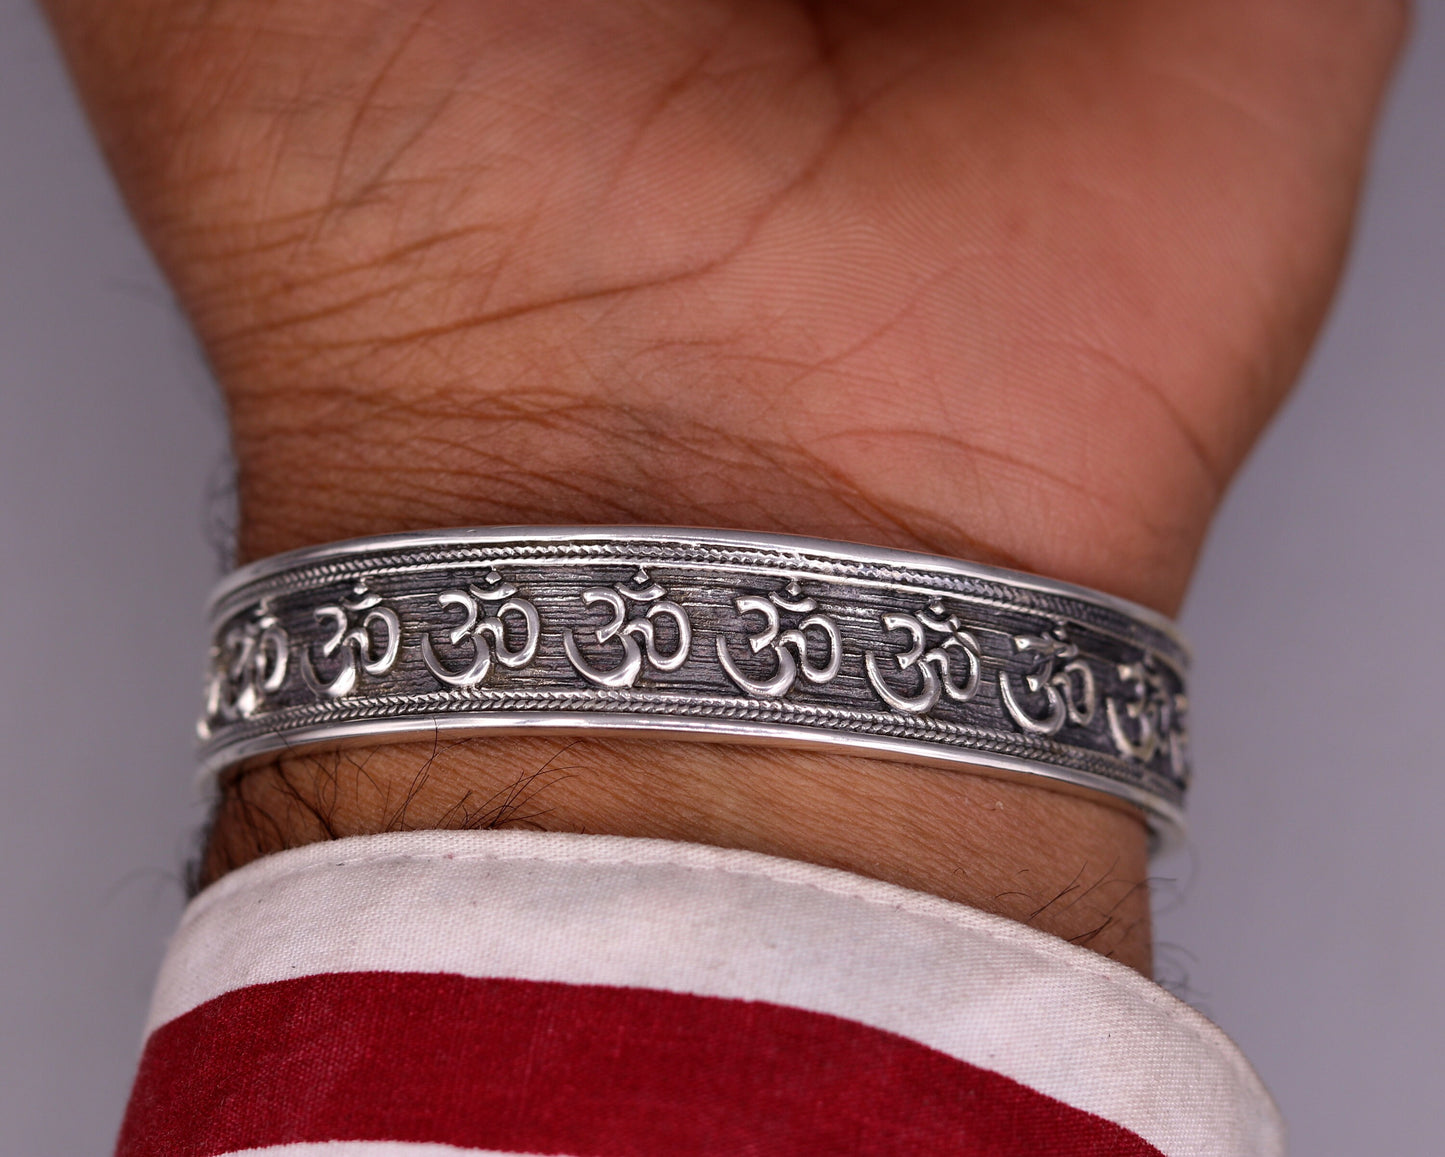 925 sterling silver or Gold polished handcrafted 'AUM' mantra bangle bracelet adjustable kada unisex ethnic stylish jewelry india Gnsk140 - TRIBAL ORNAMENTS